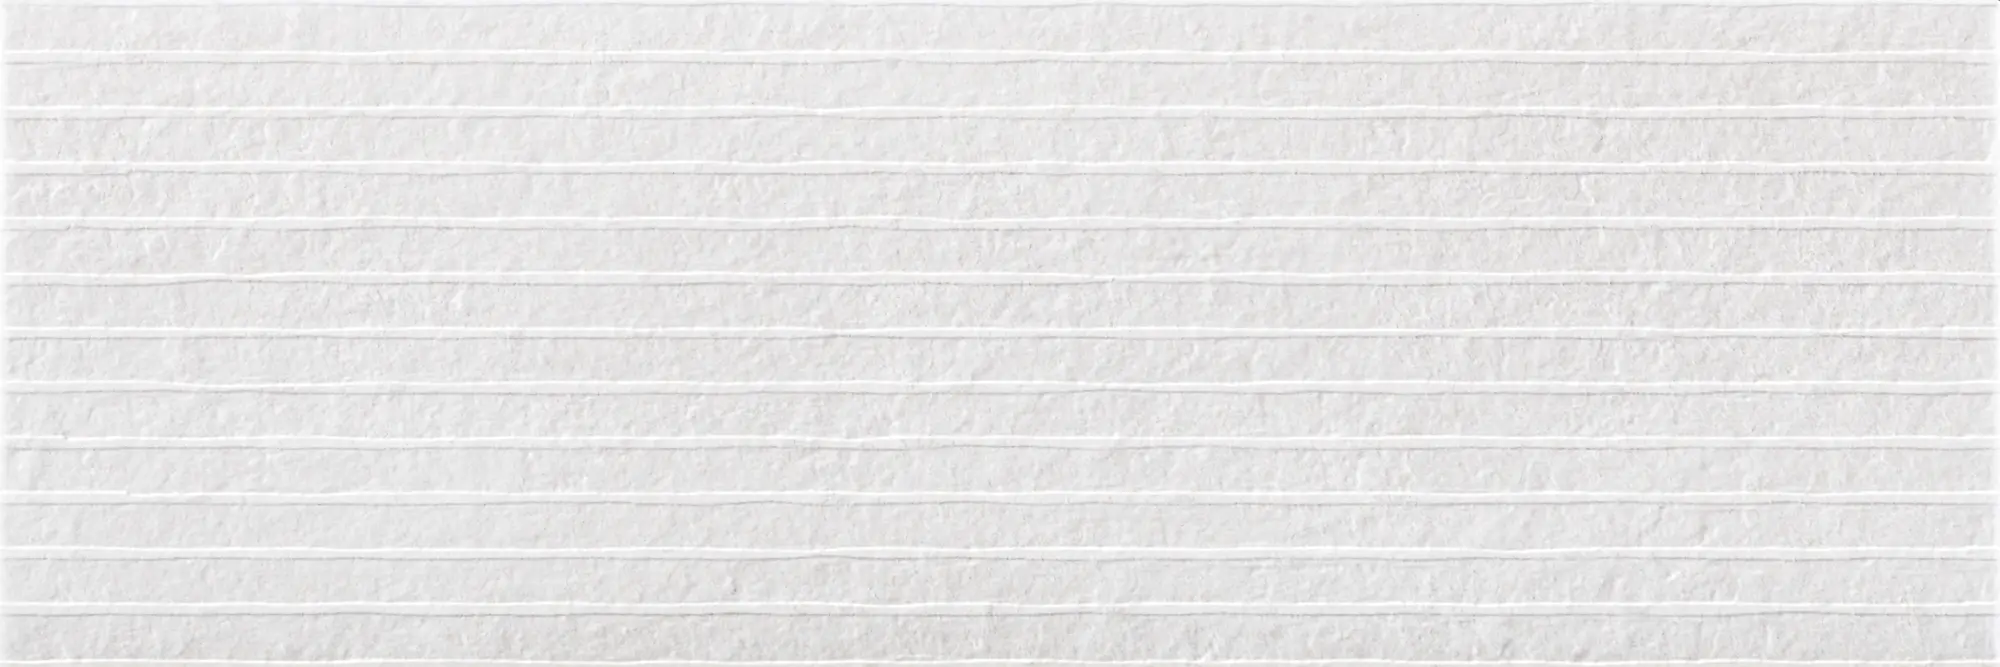 Azulejo cerámico caen efecto relieve, cemento buron-blanco 20x60 cm